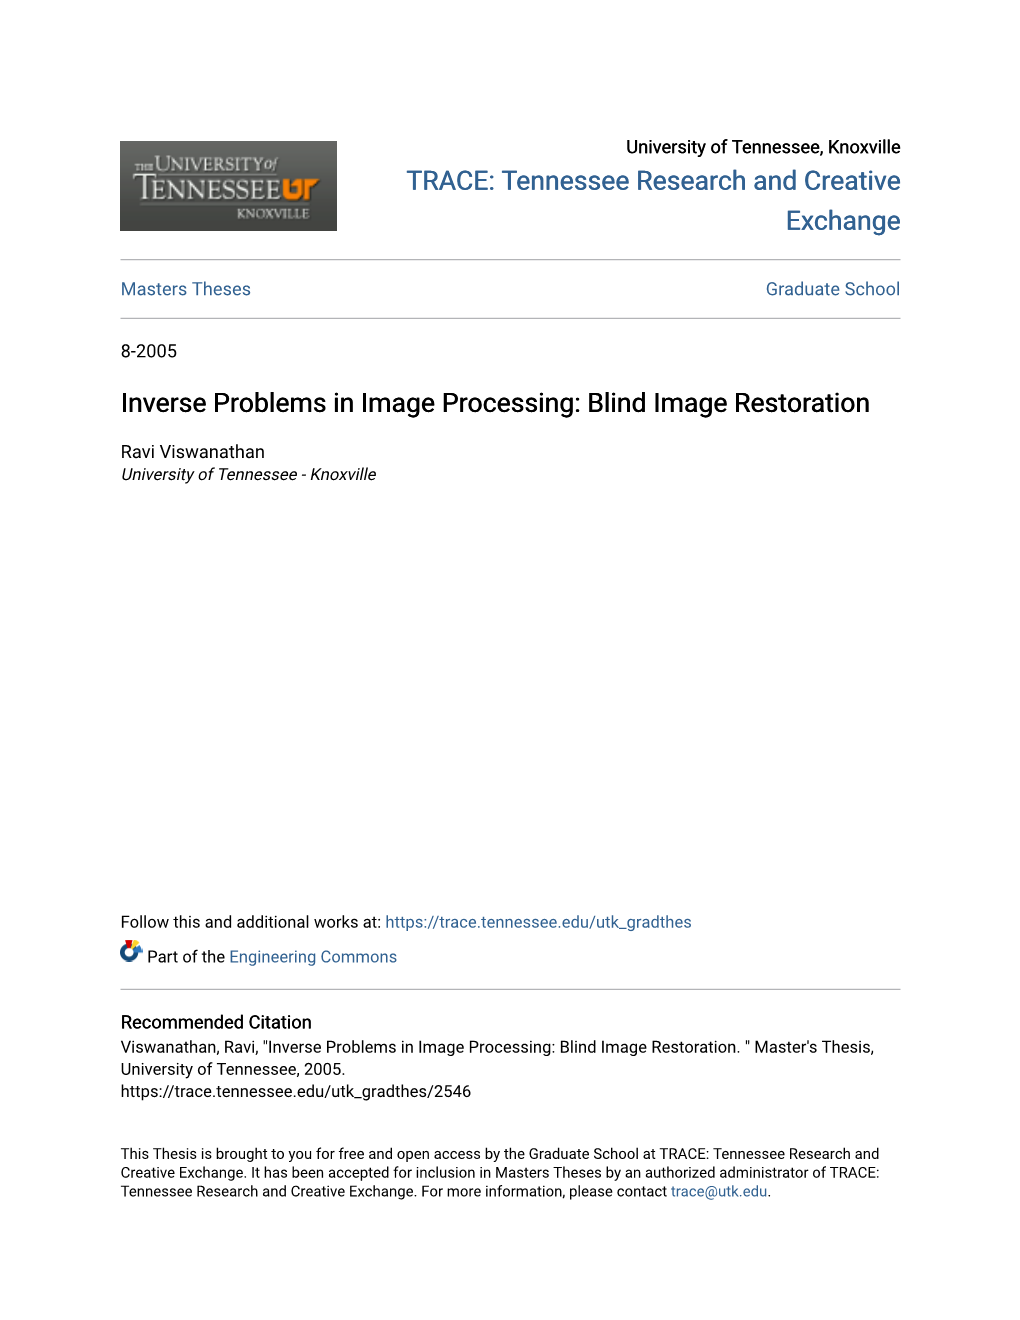 Inverse Problems in Image Processing: Blind Image Restoration